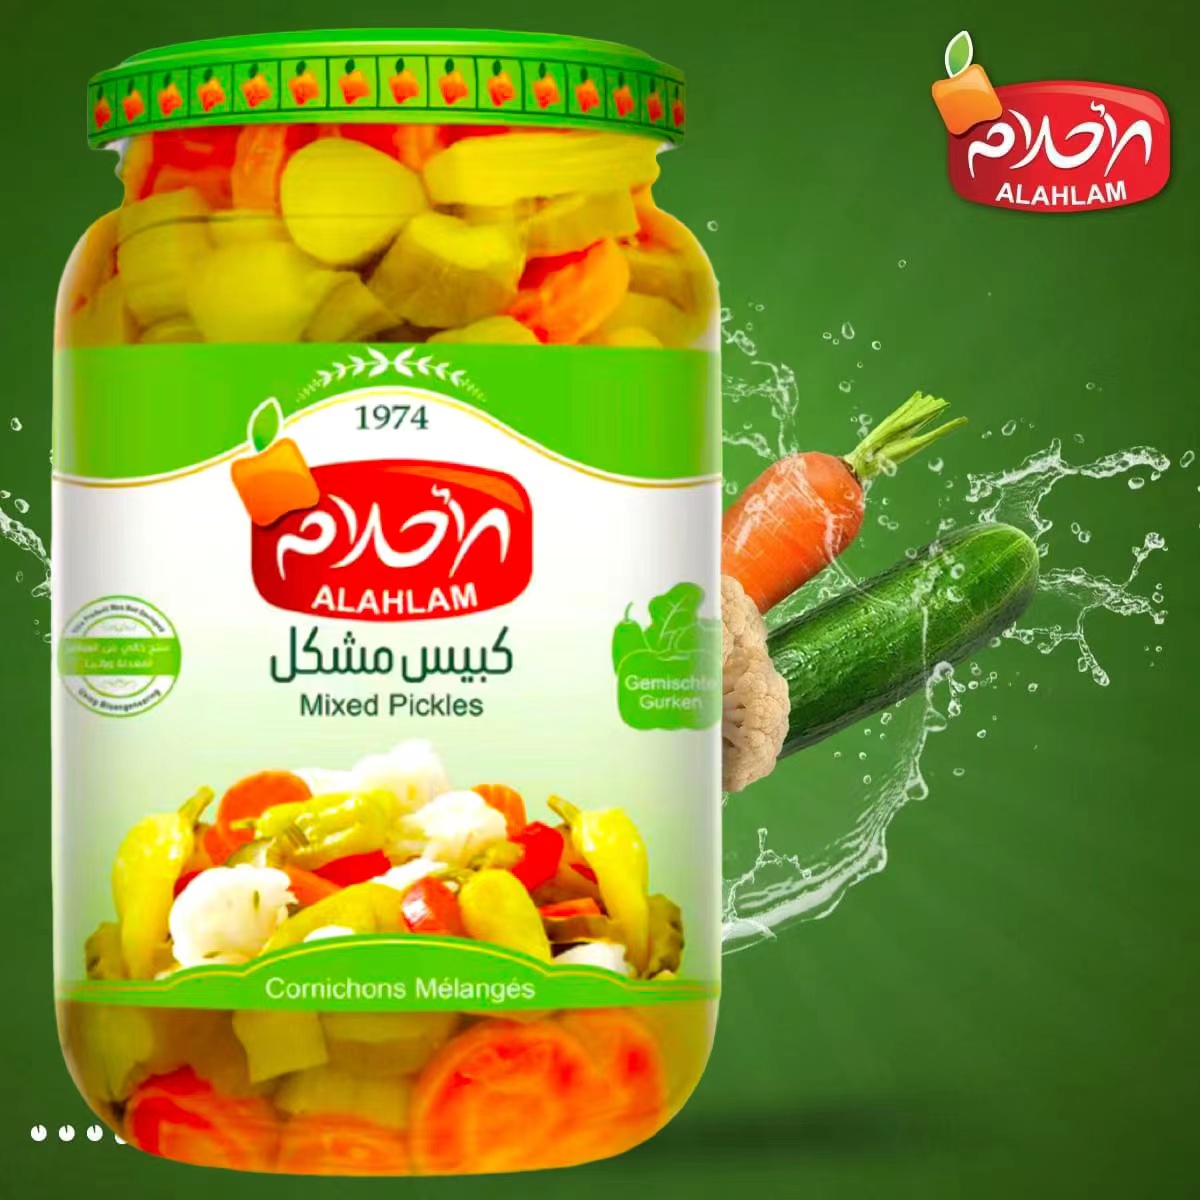 ALAHLAM MIXED PICKLES叙利亚进口泡菜阿拉伯中东CUCUMBER酸黄瓜